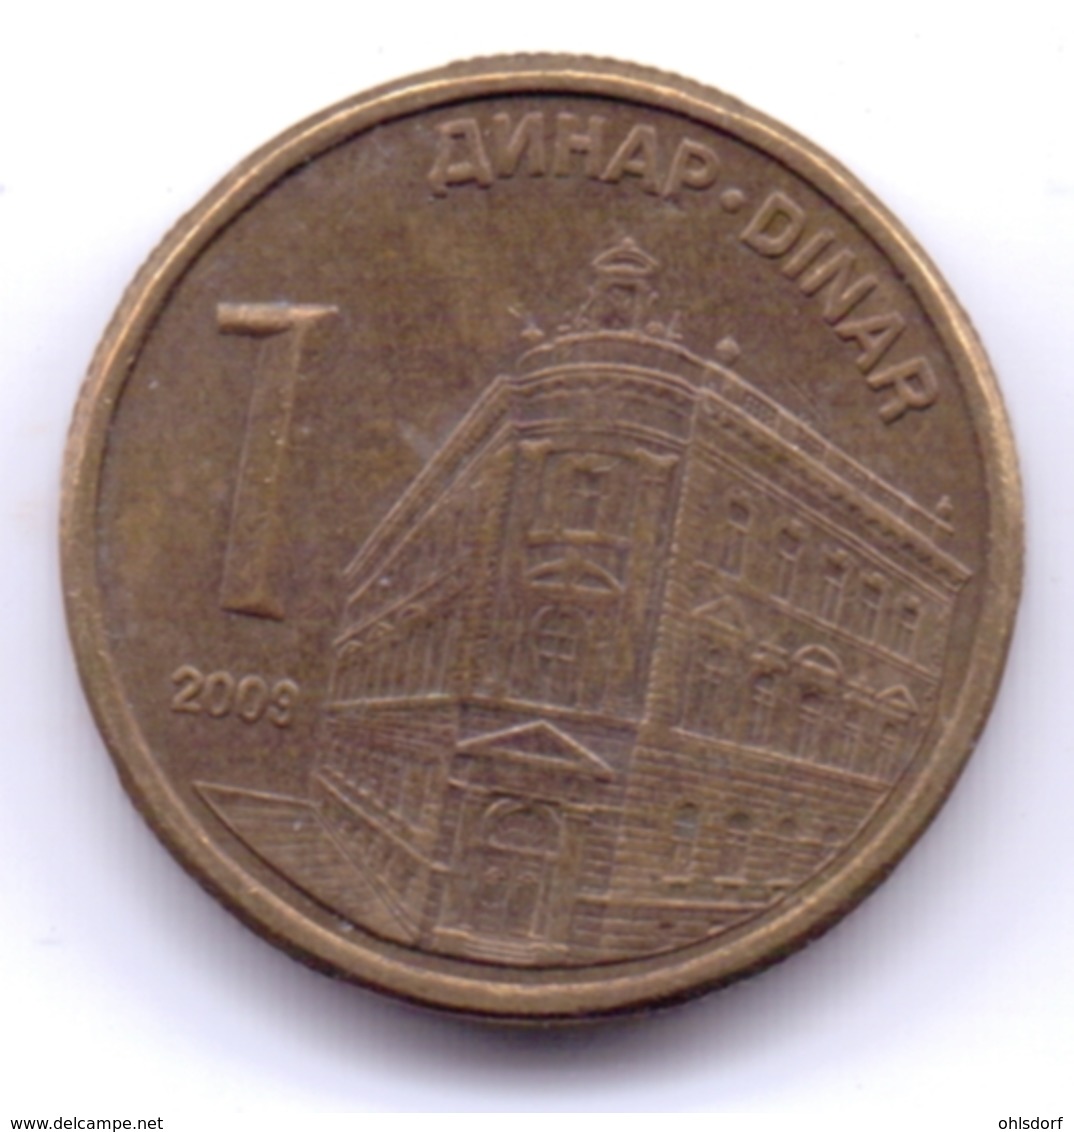 SERBIA 2009: 1 Dinar, Magnetic, KM 48 - Serbia